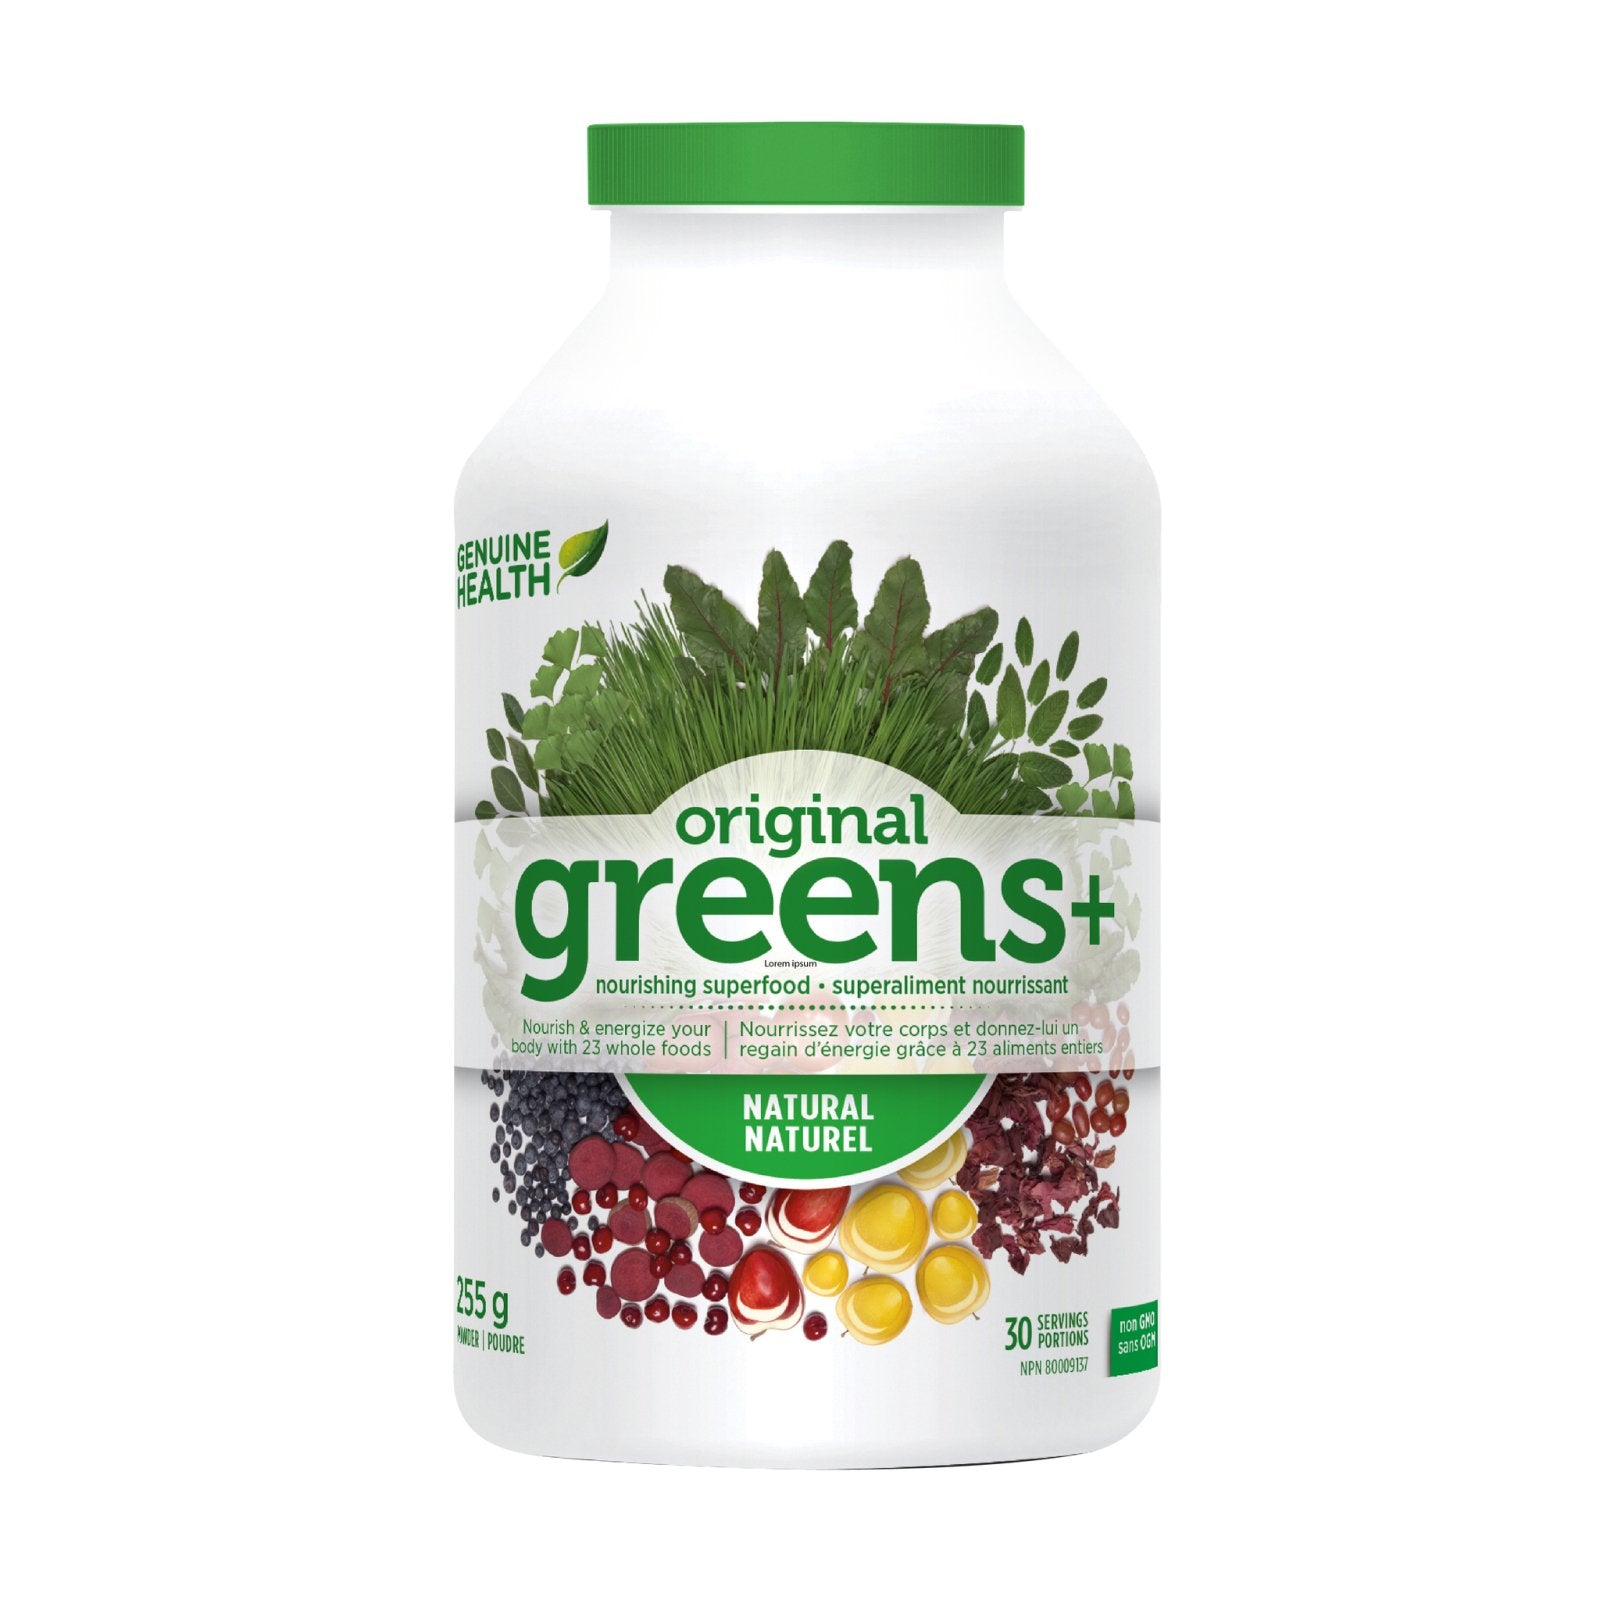 Genuine Health original greens+ natural (255/510 g)